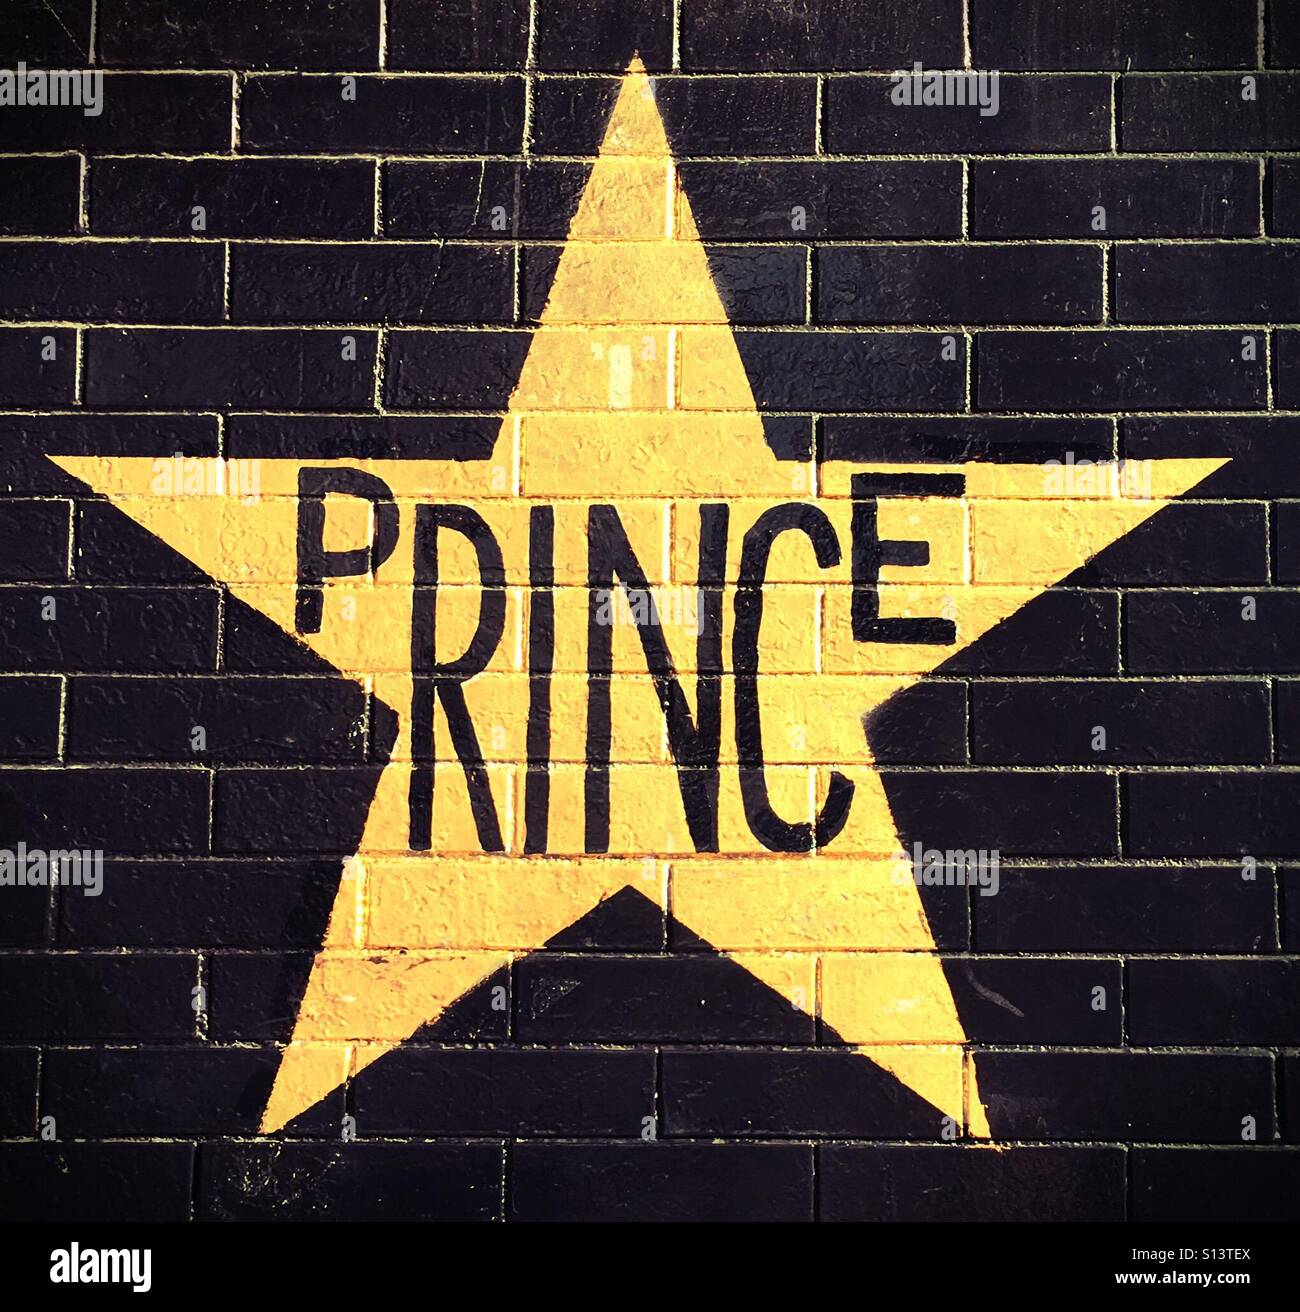 Prince's star at First Avenue nightclub in Minneapolis, Minnesota, USA. Stock Photo